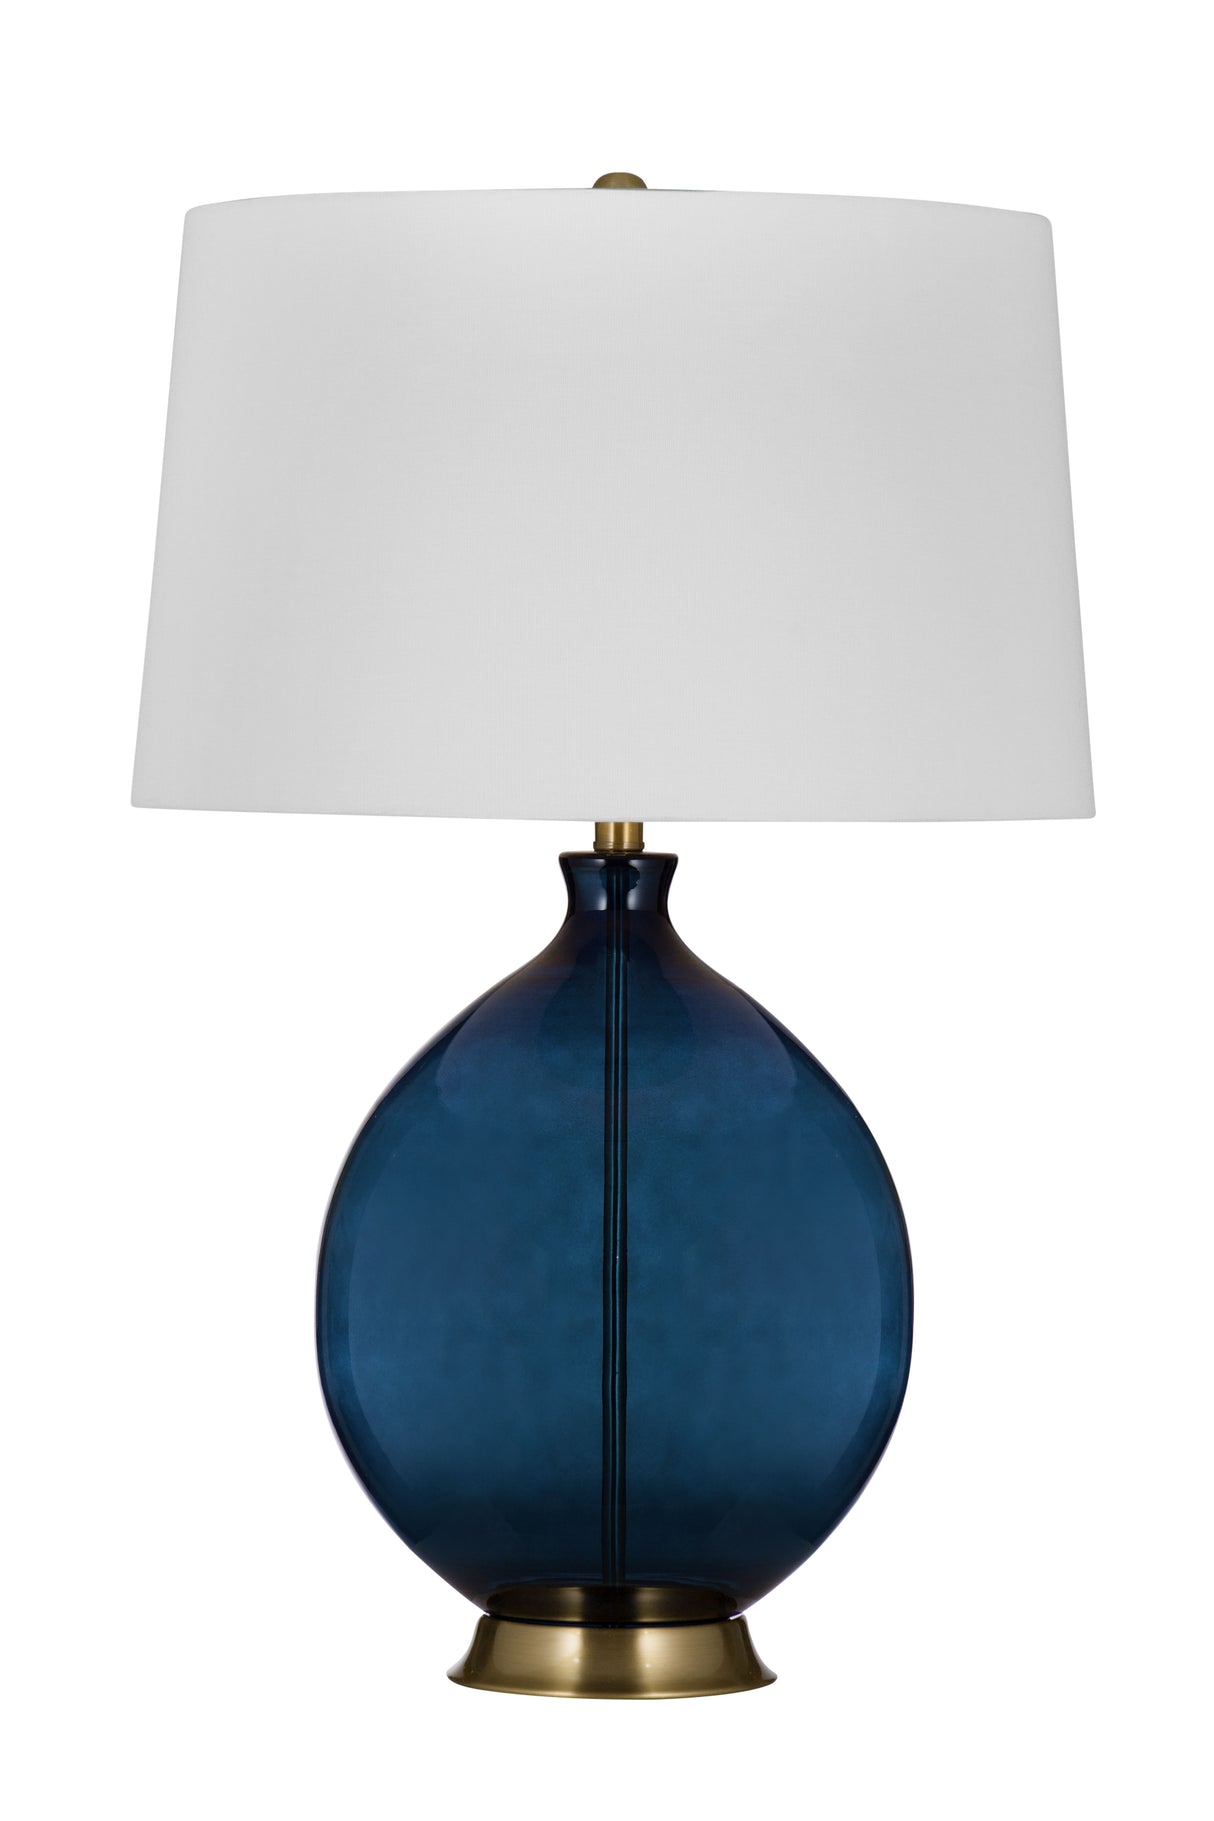 Sierra - Table Lamp - Blue